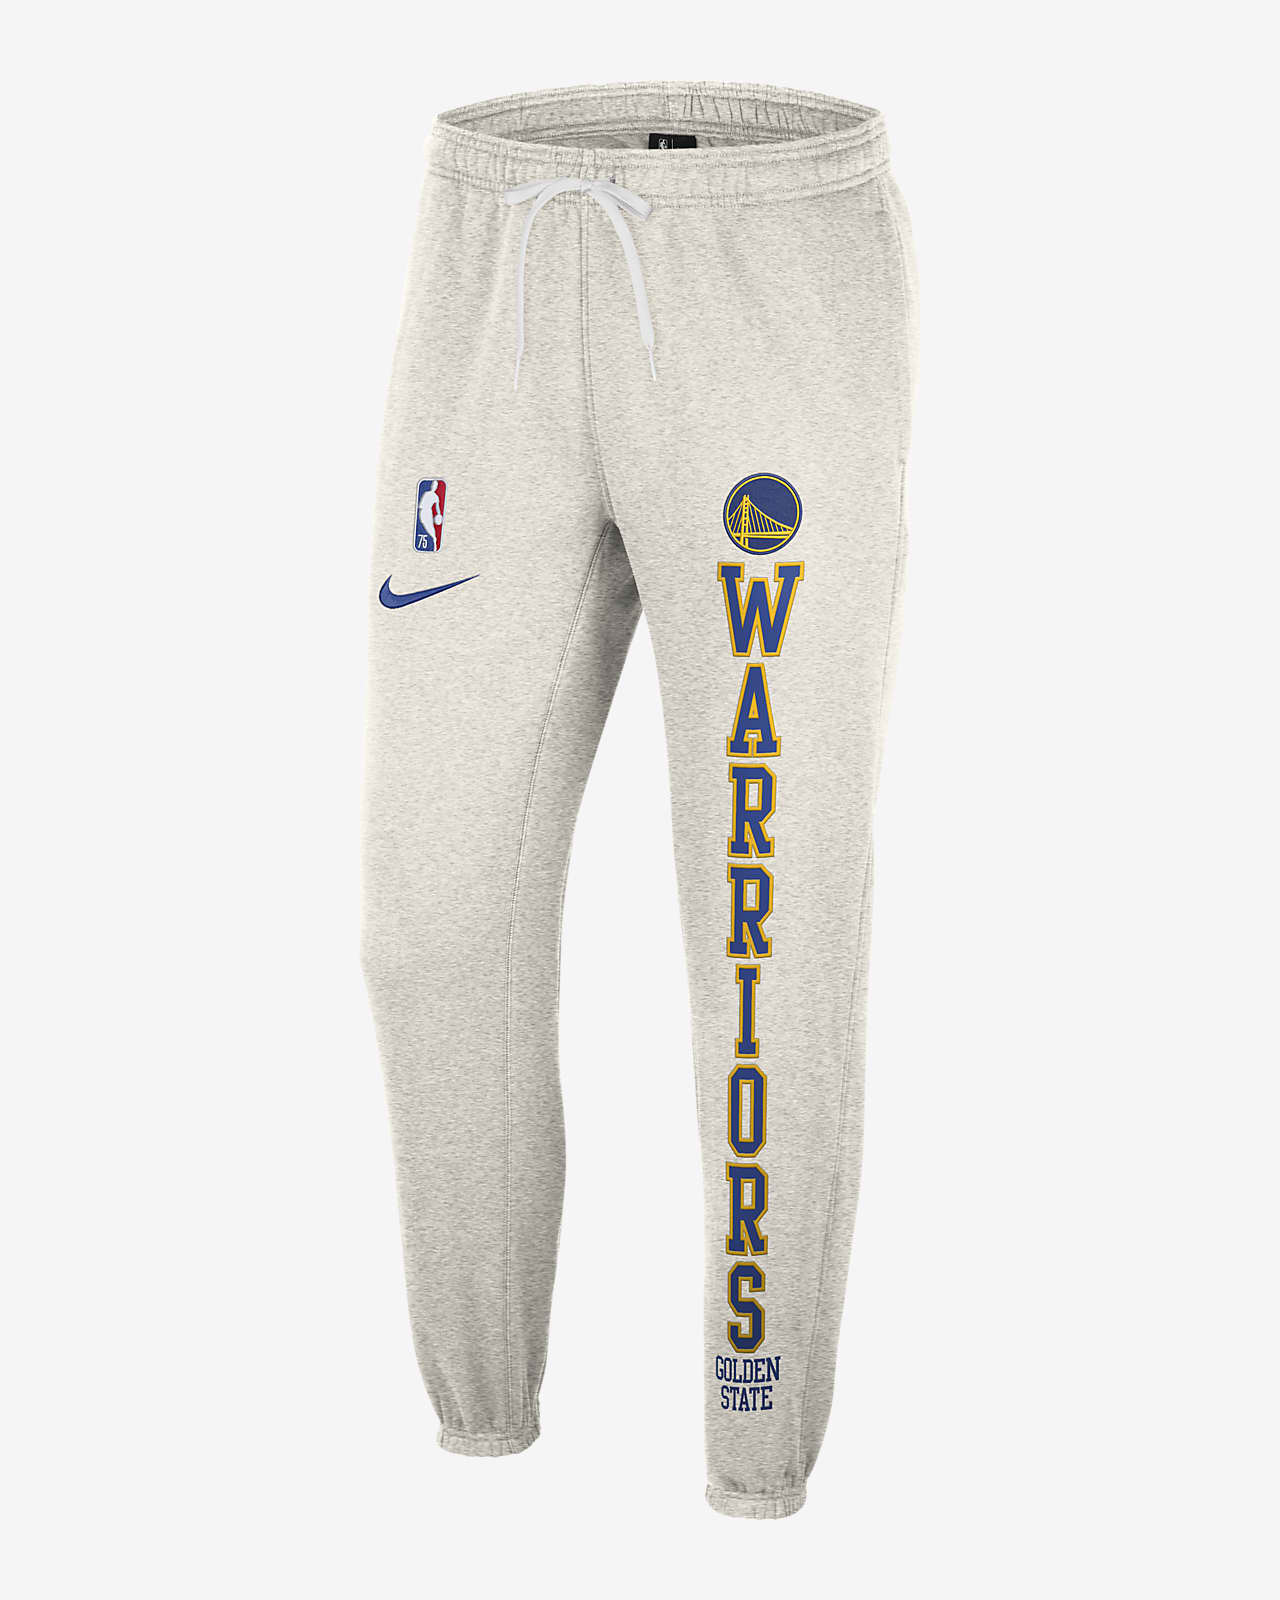 Golden State Warriors Courtside Men's Nike NBA Fleece Pants.